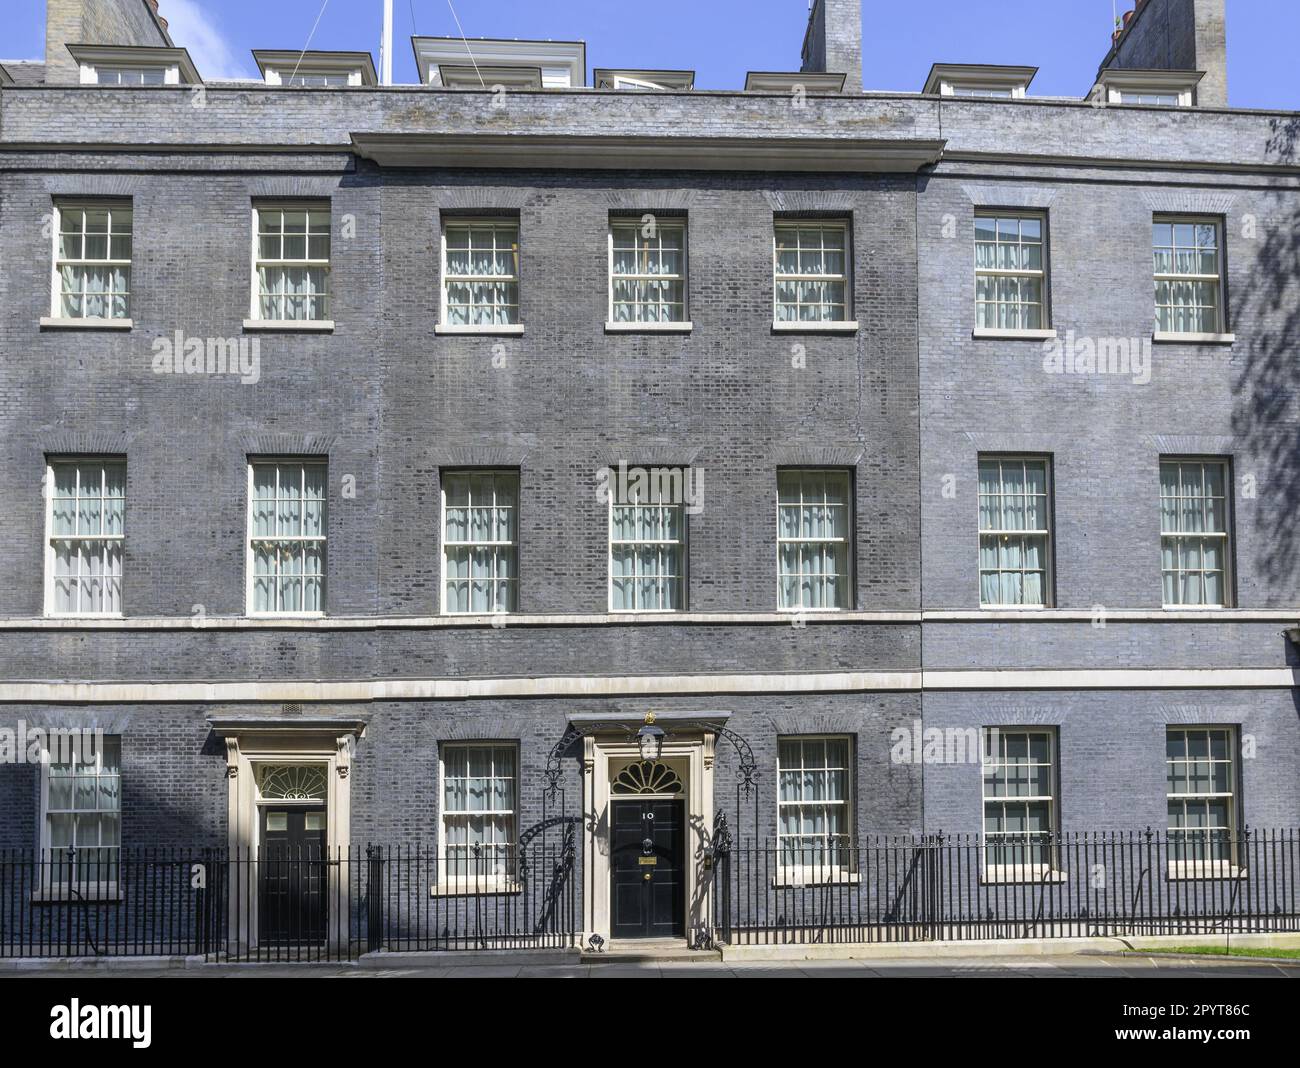 London, England, UK. 10 Downing Street facade Stock Photo